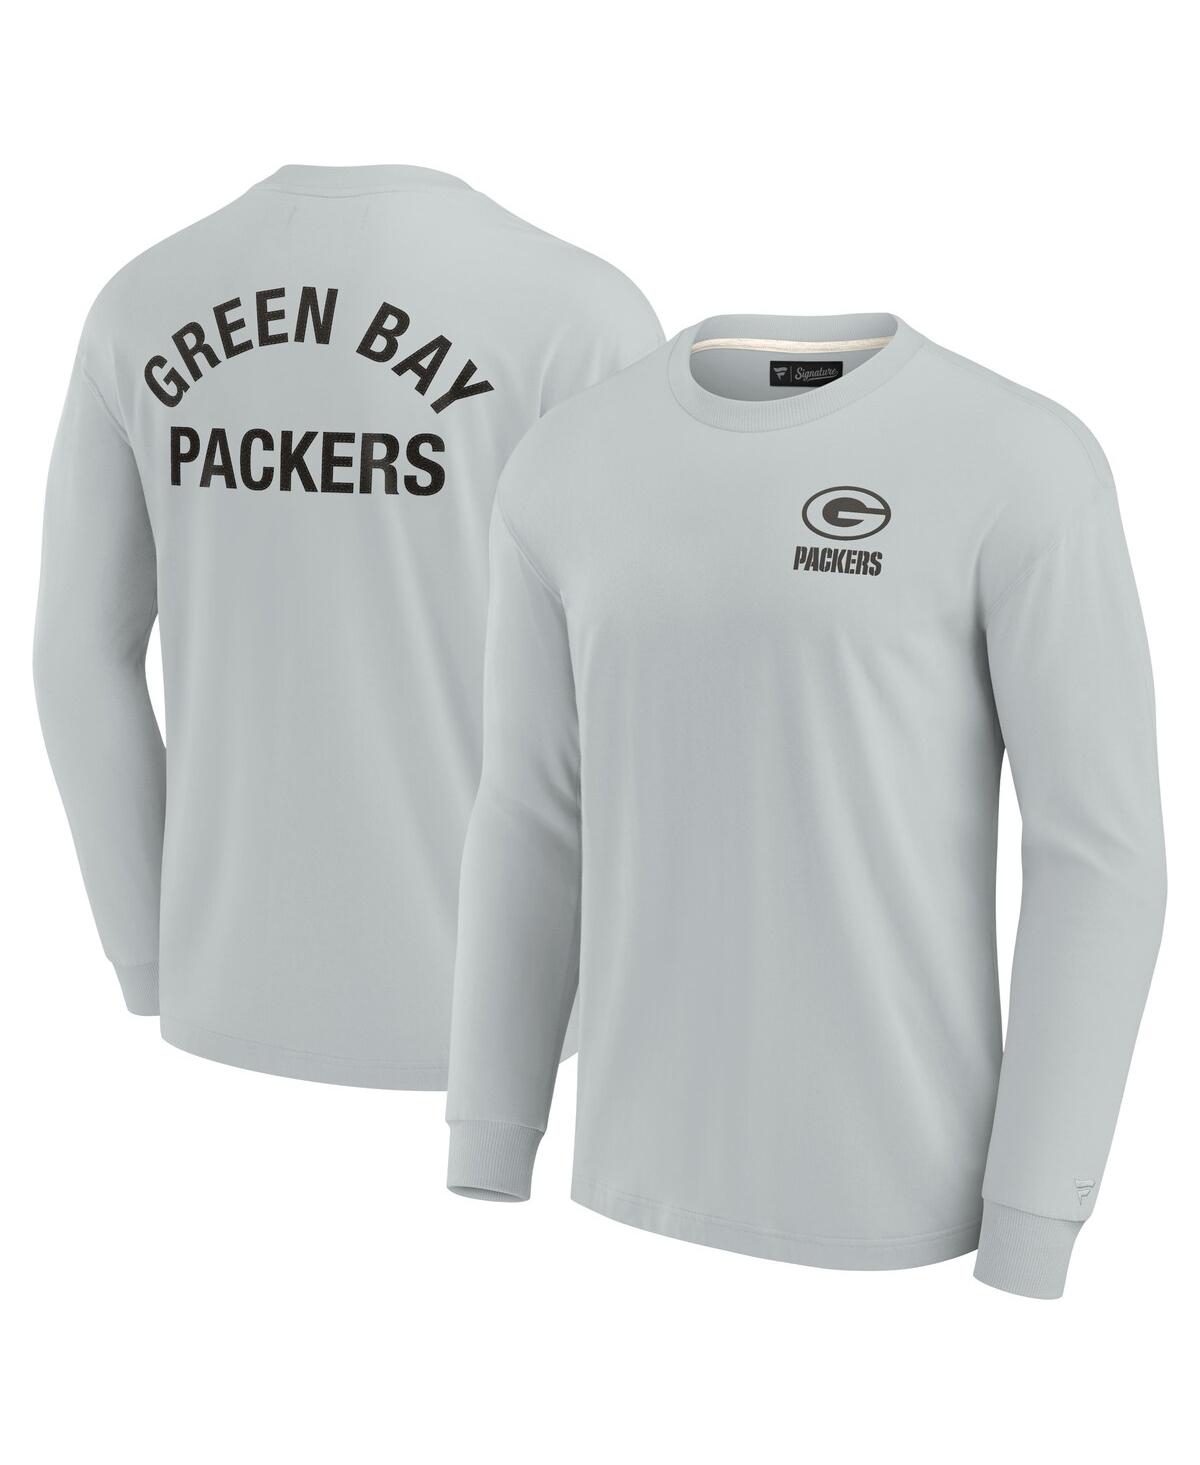 Men's and Women's Fanatics Signature Gray Green Bay Packers Super Soft Long Sleeve T-shirt - Gray